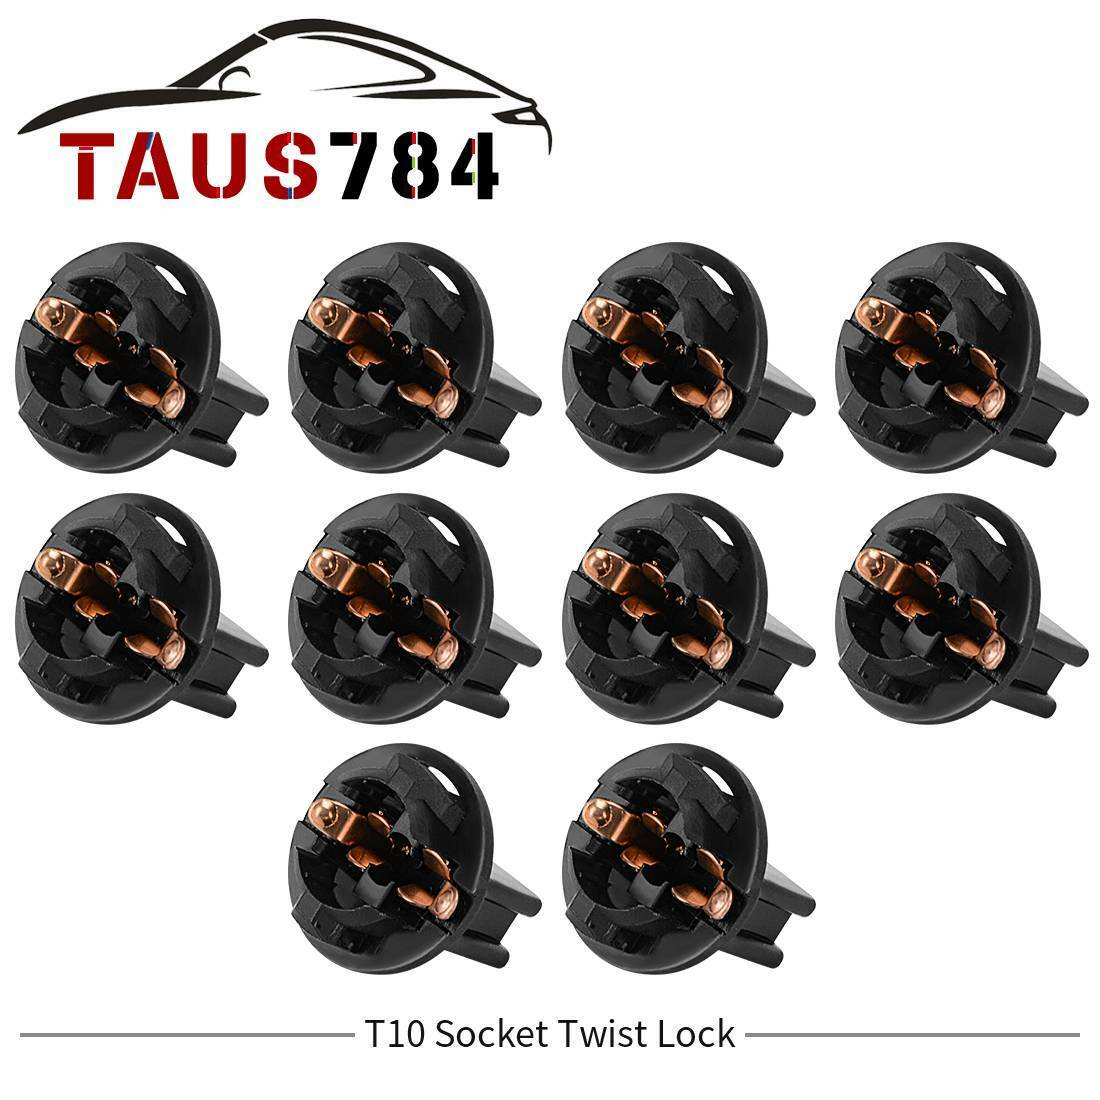 10 PCS Twist Lock T10 168 194 Wedge instrument Panel Dash Light Bulb Base Socket